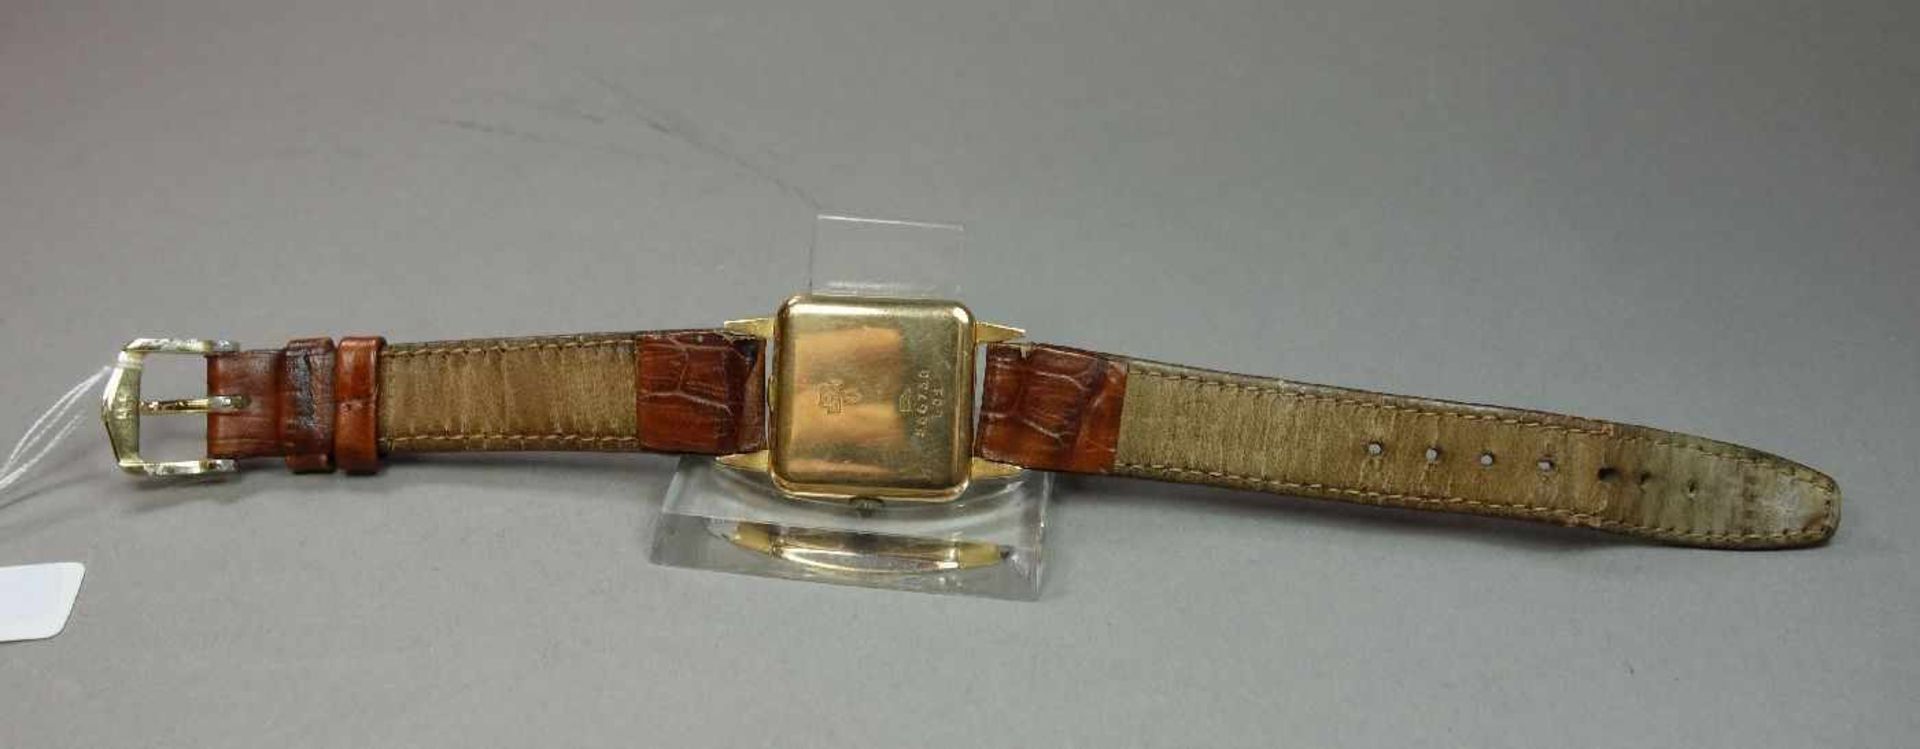 ART DÉCO ARMBANDUHR / wristwatch, Handaufzug, Manufaktur Leonidas Watch Factory / Schweiz. Eckiges - Image 3 of 6